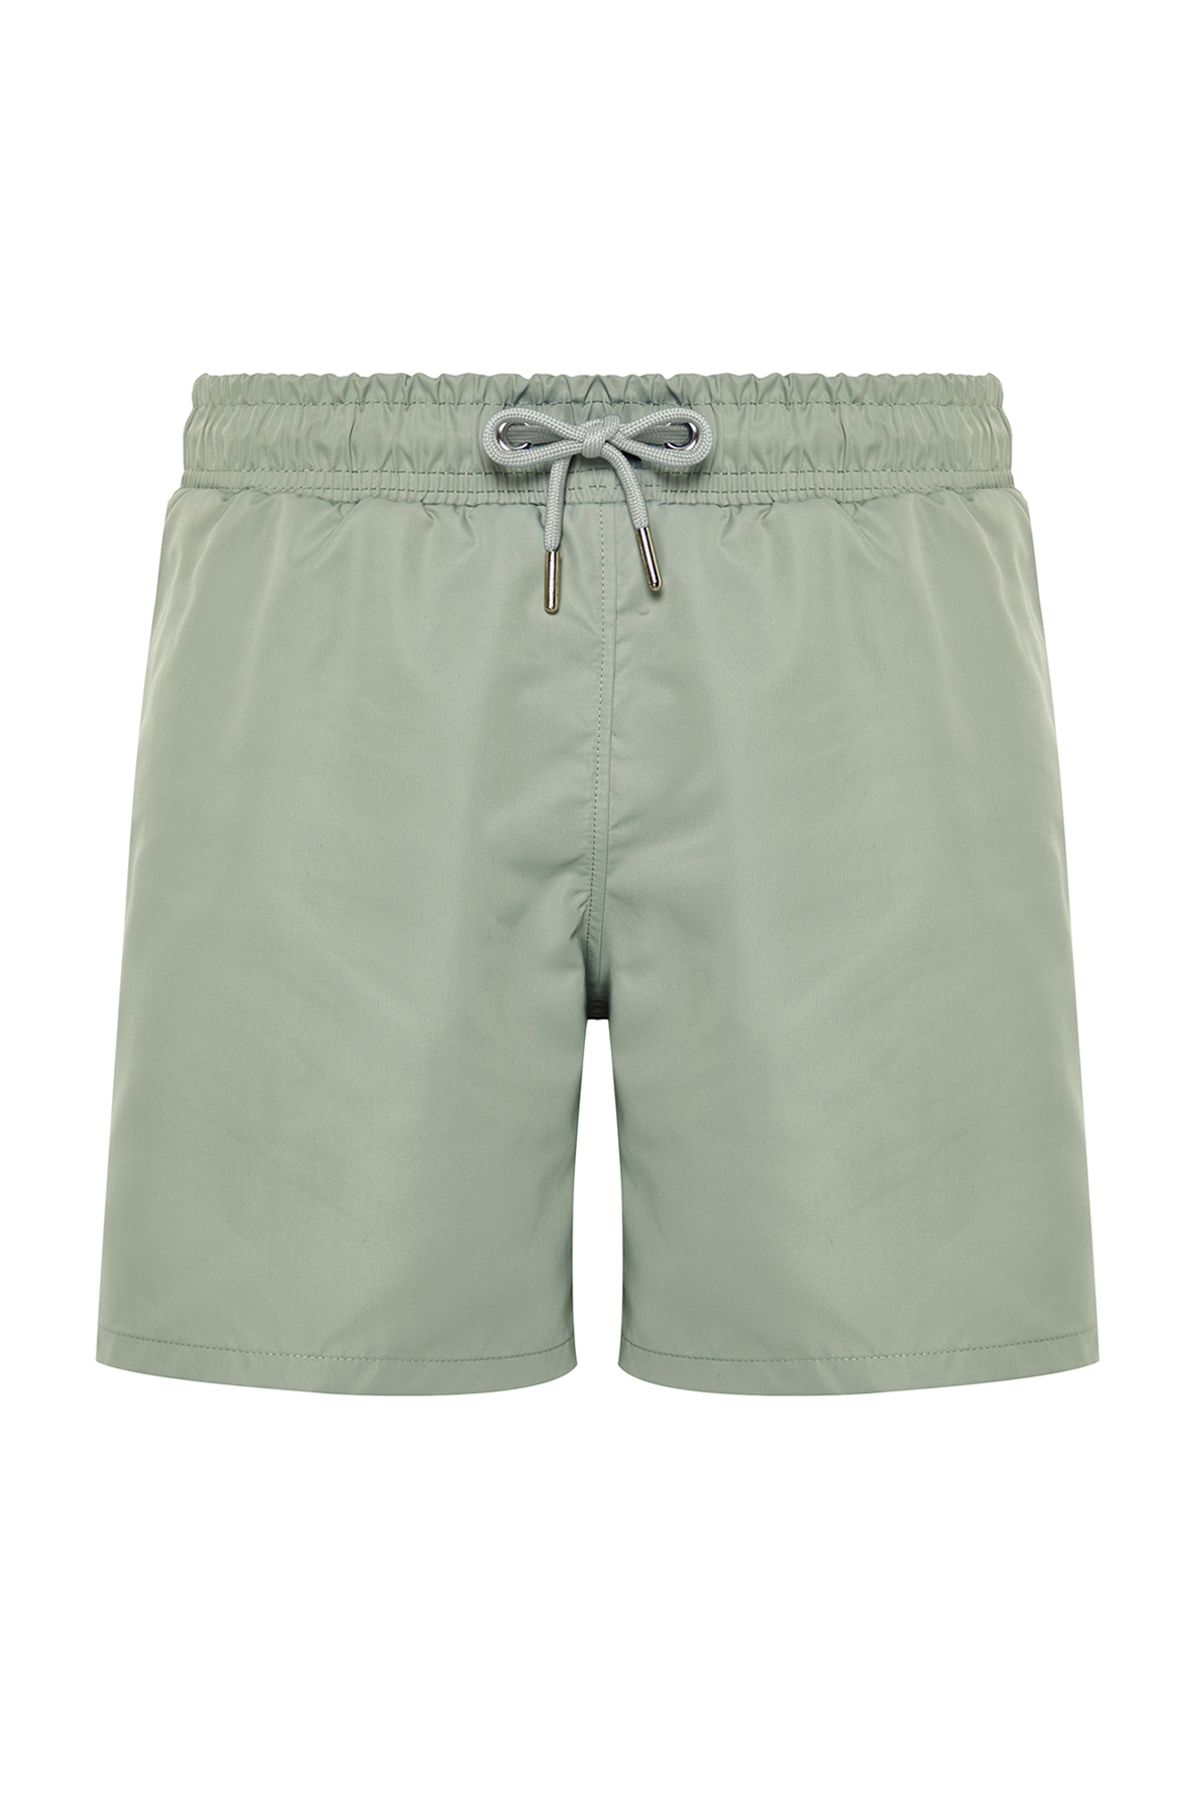 Trendyol Light Khaki Men's Extra Short Basic Sea Shorts